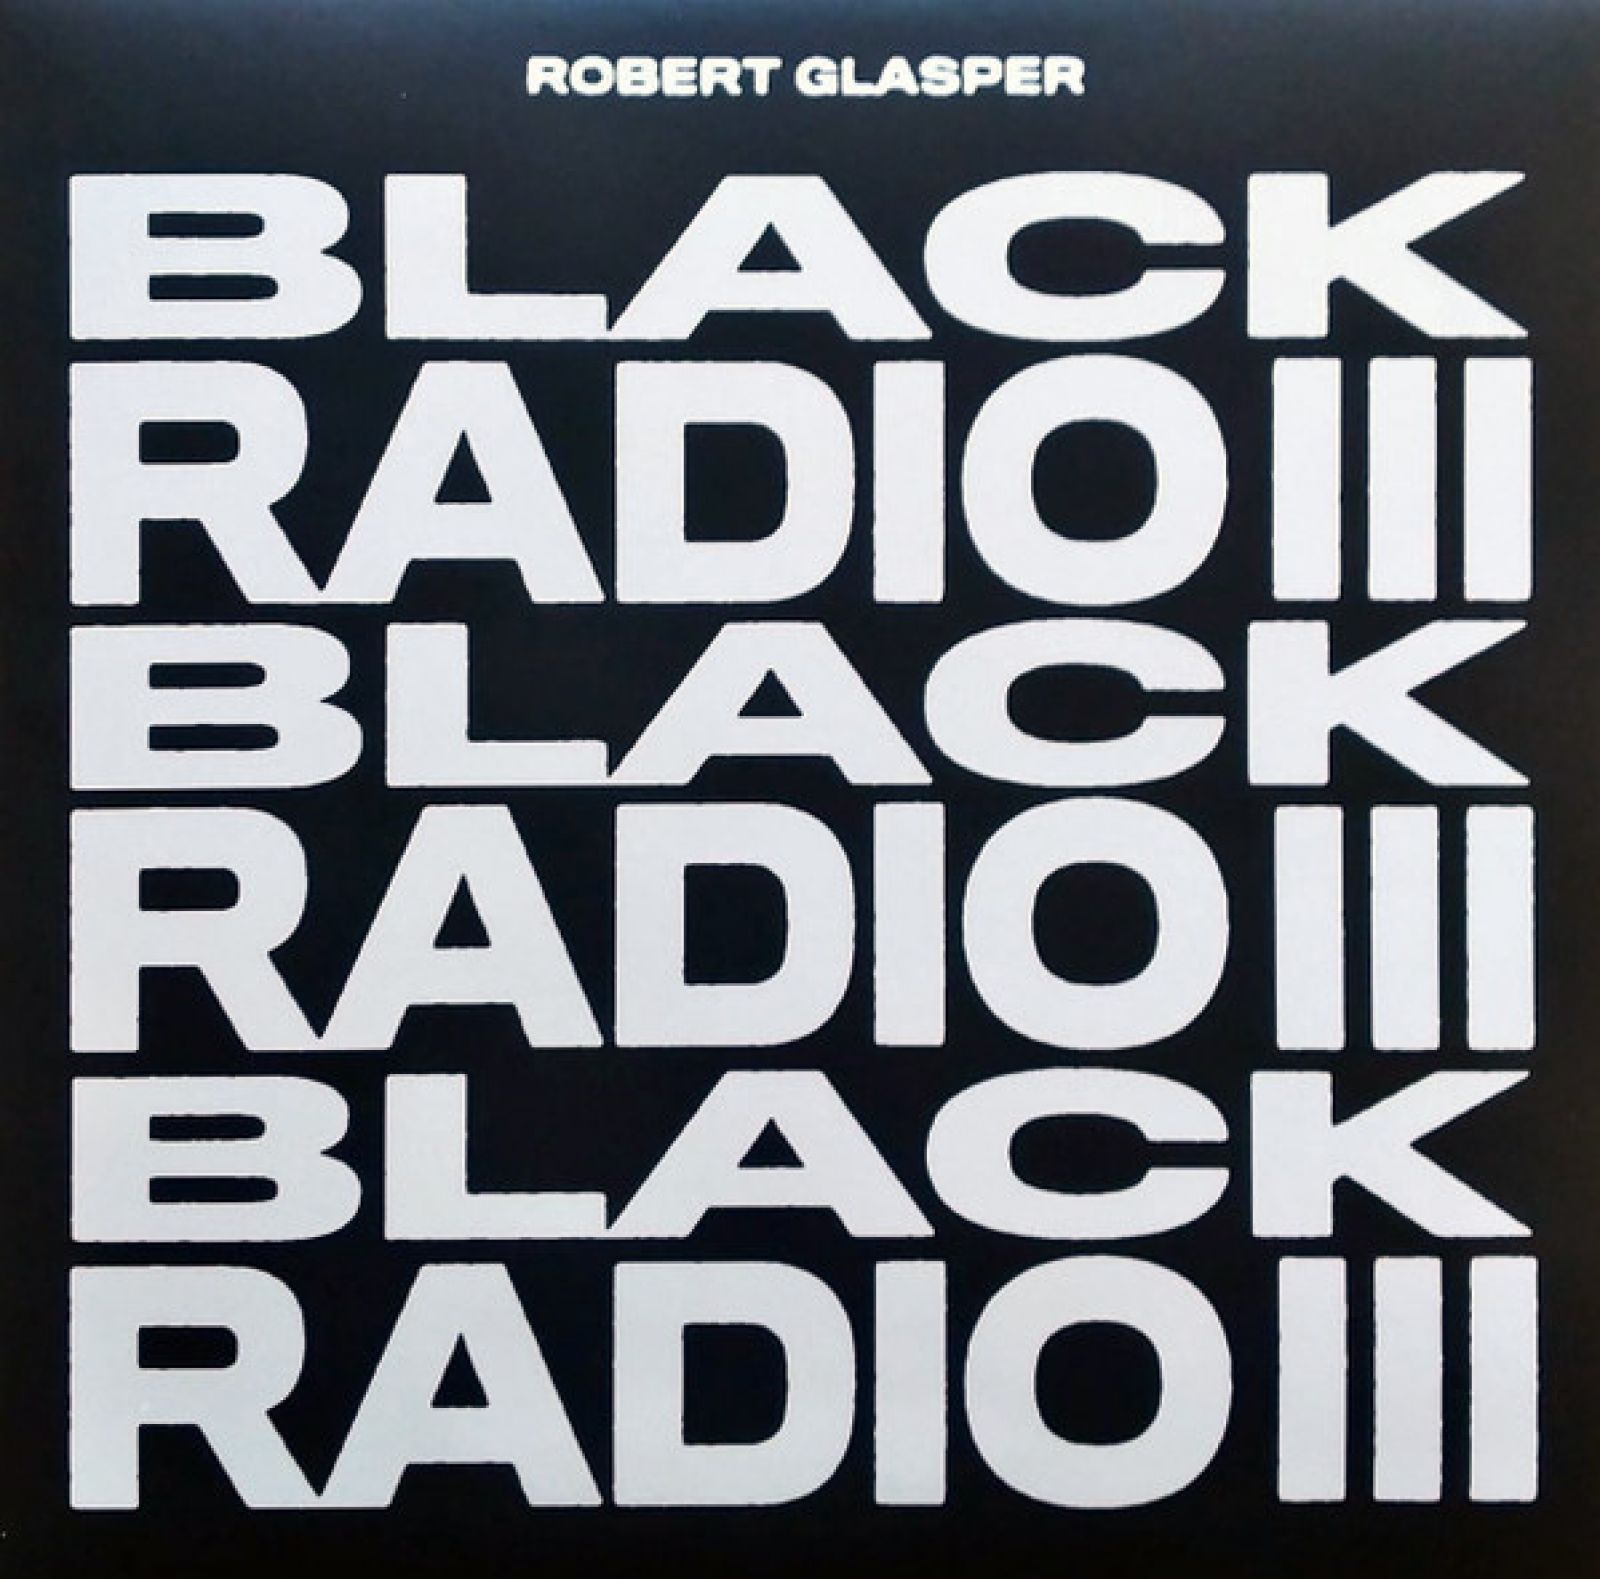 Виниловая пластинка Glasper, Robert, Black Radio III (0888072400313)